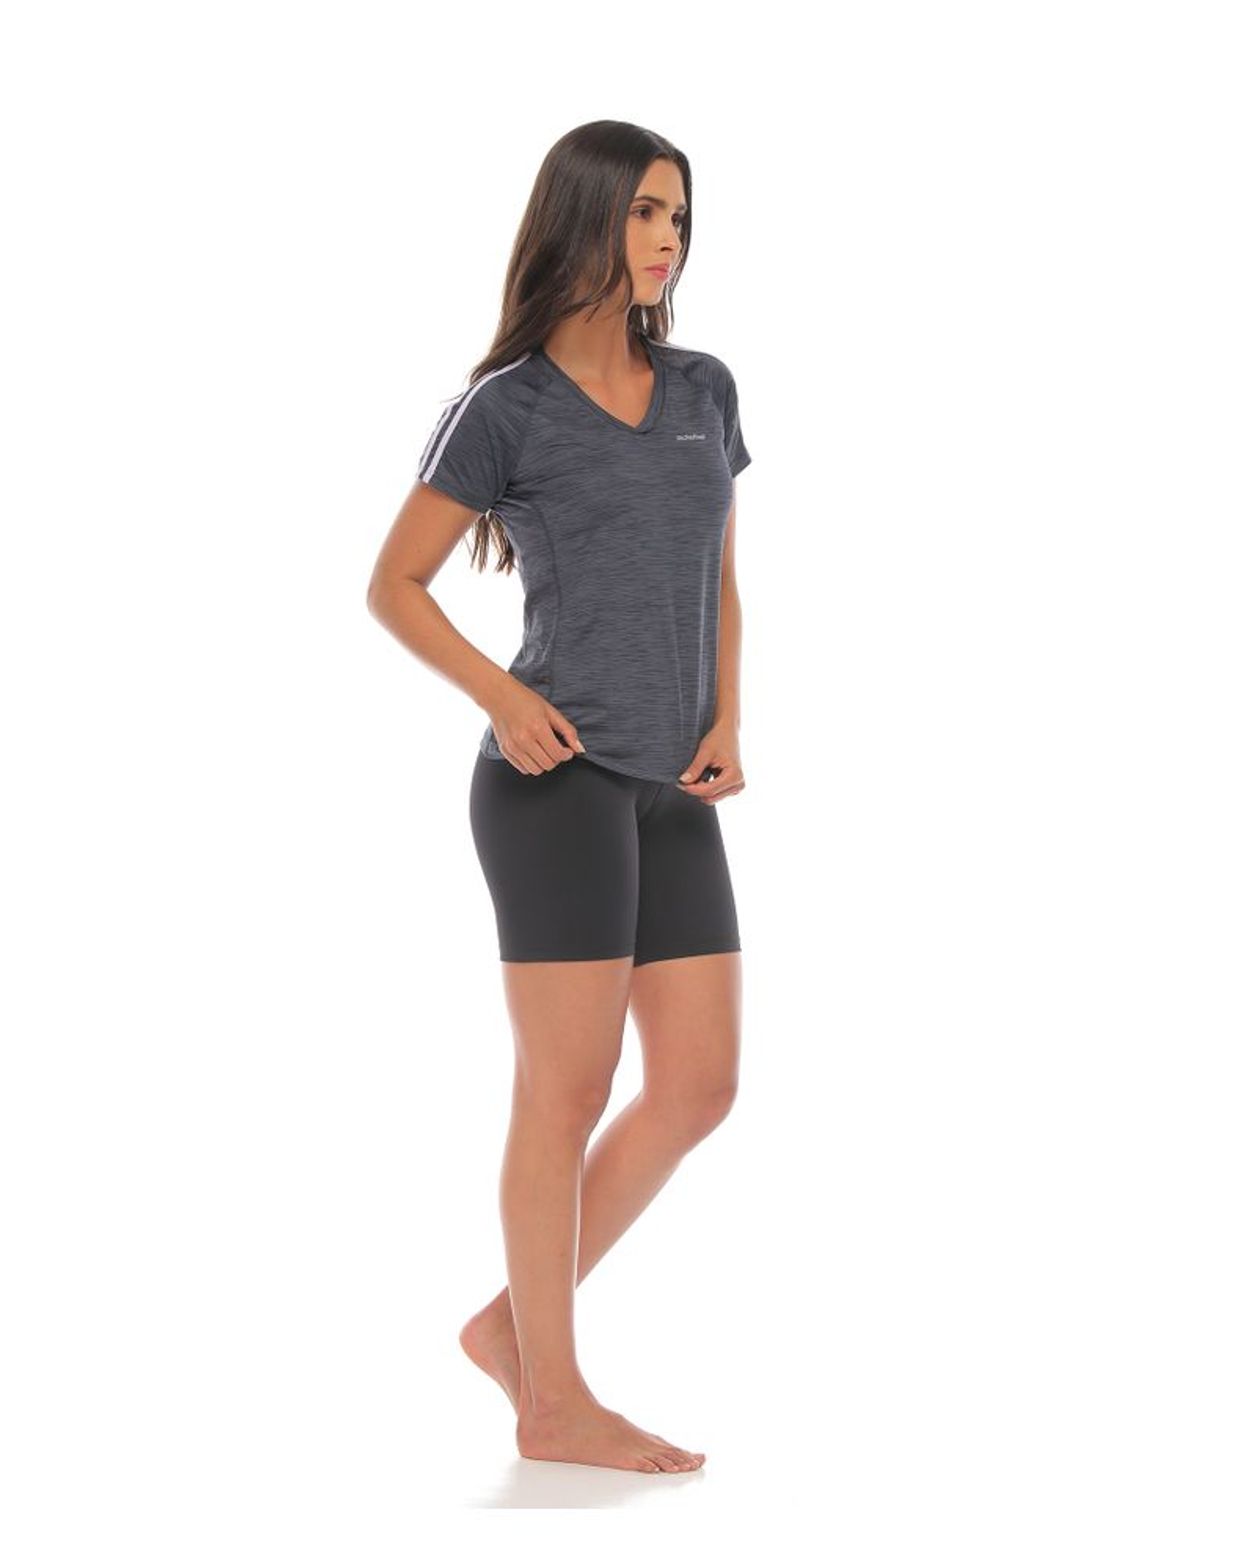 modelo-con-Camiseta-cuello-V-Gris-Oscuro-y-short-deportivo-para-Mujer-parte-lateral-derecha